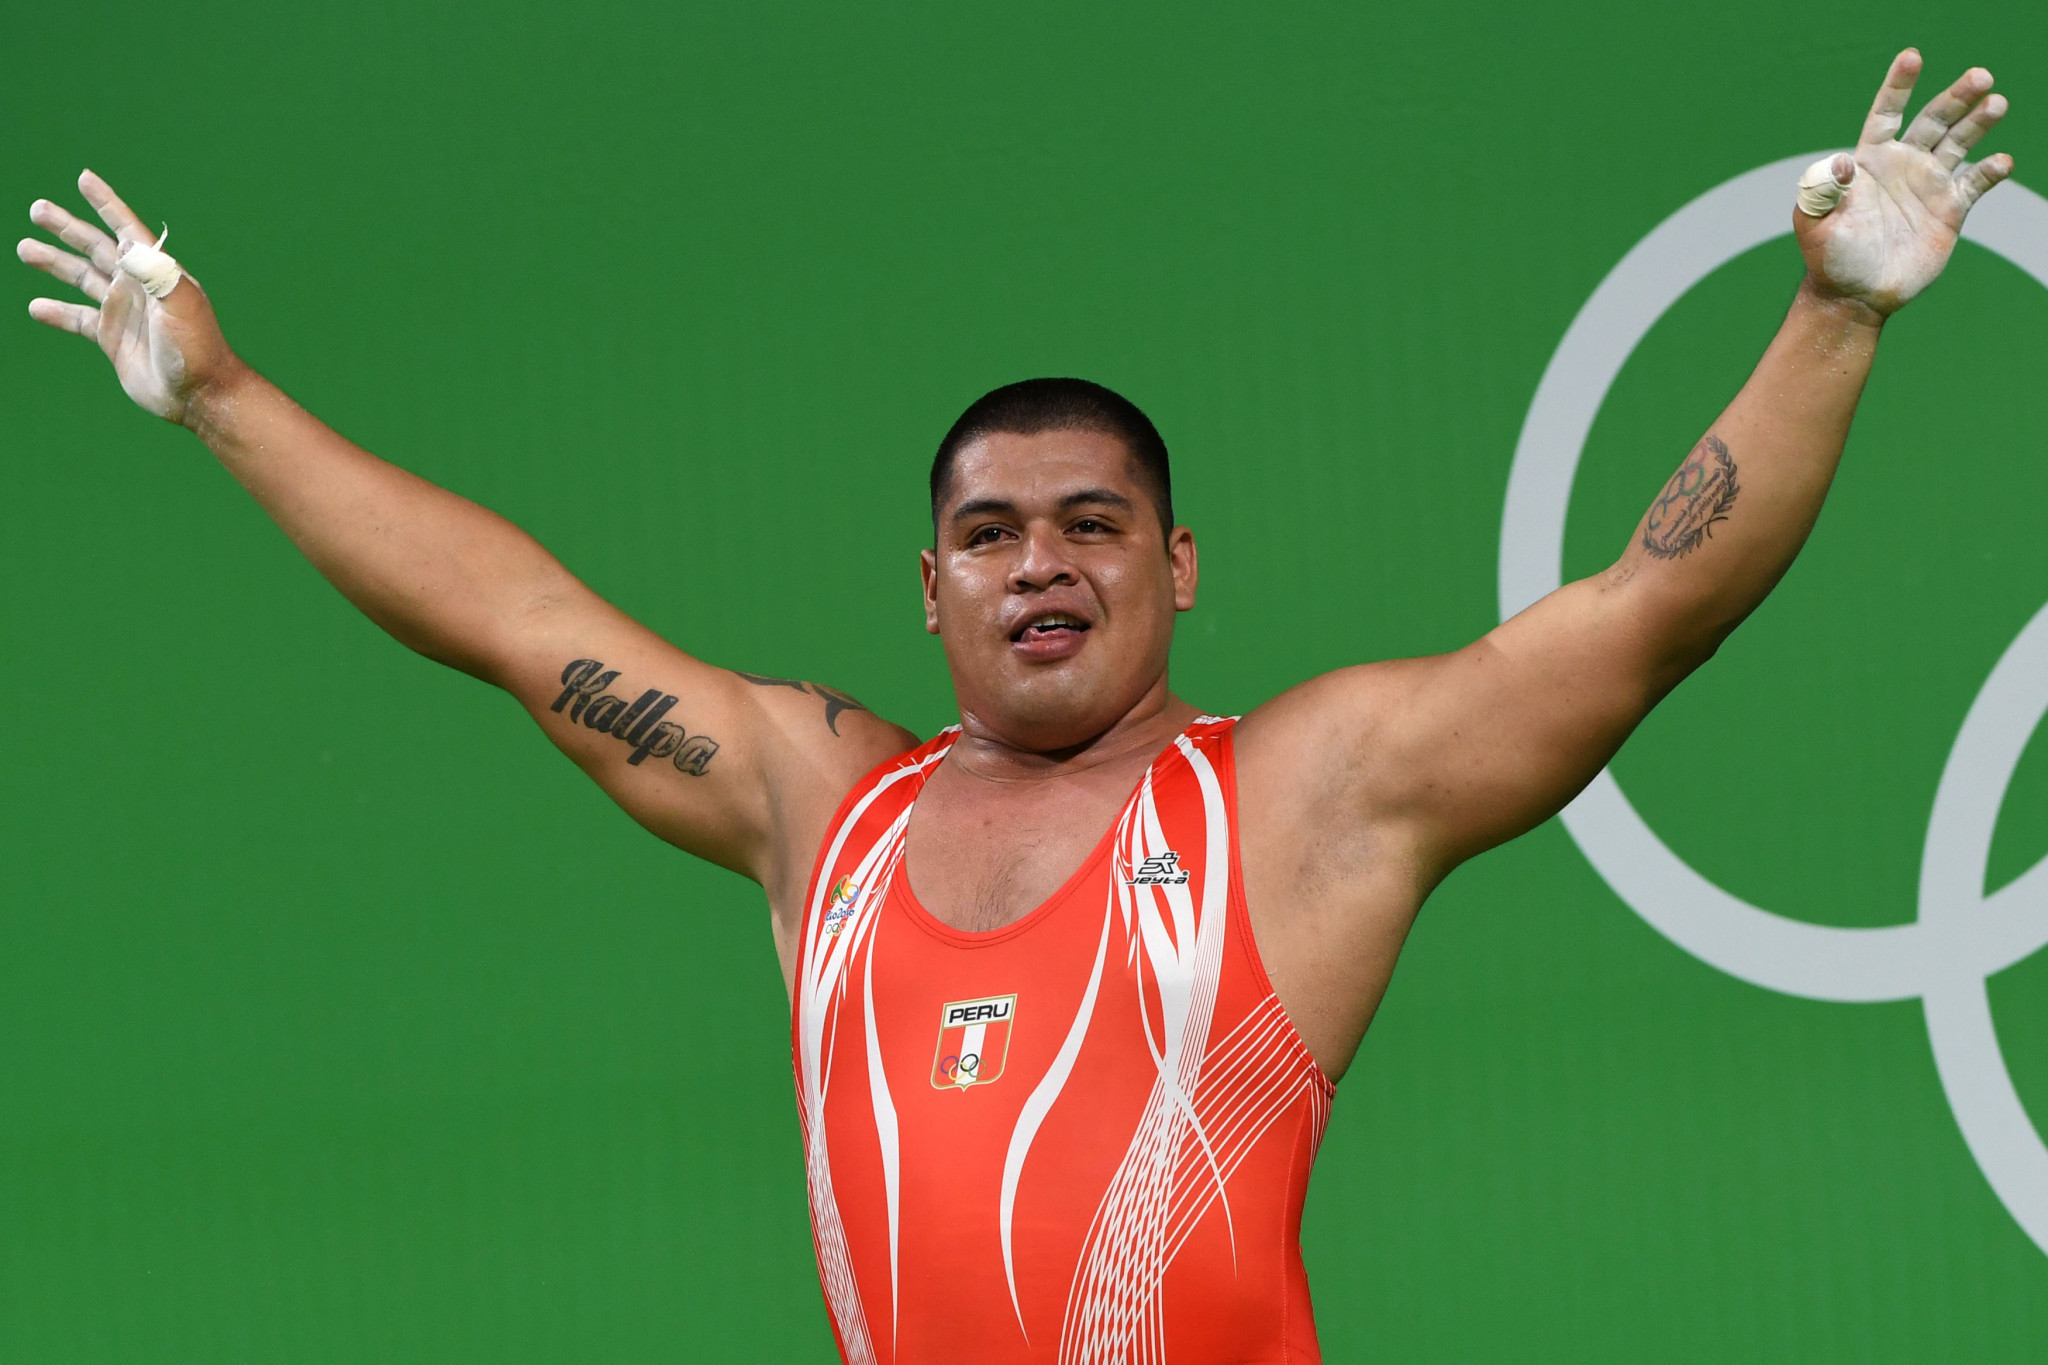 Peru's Hernan Viera won the men's 109kg title in dramatic fashion  ©Getty Images